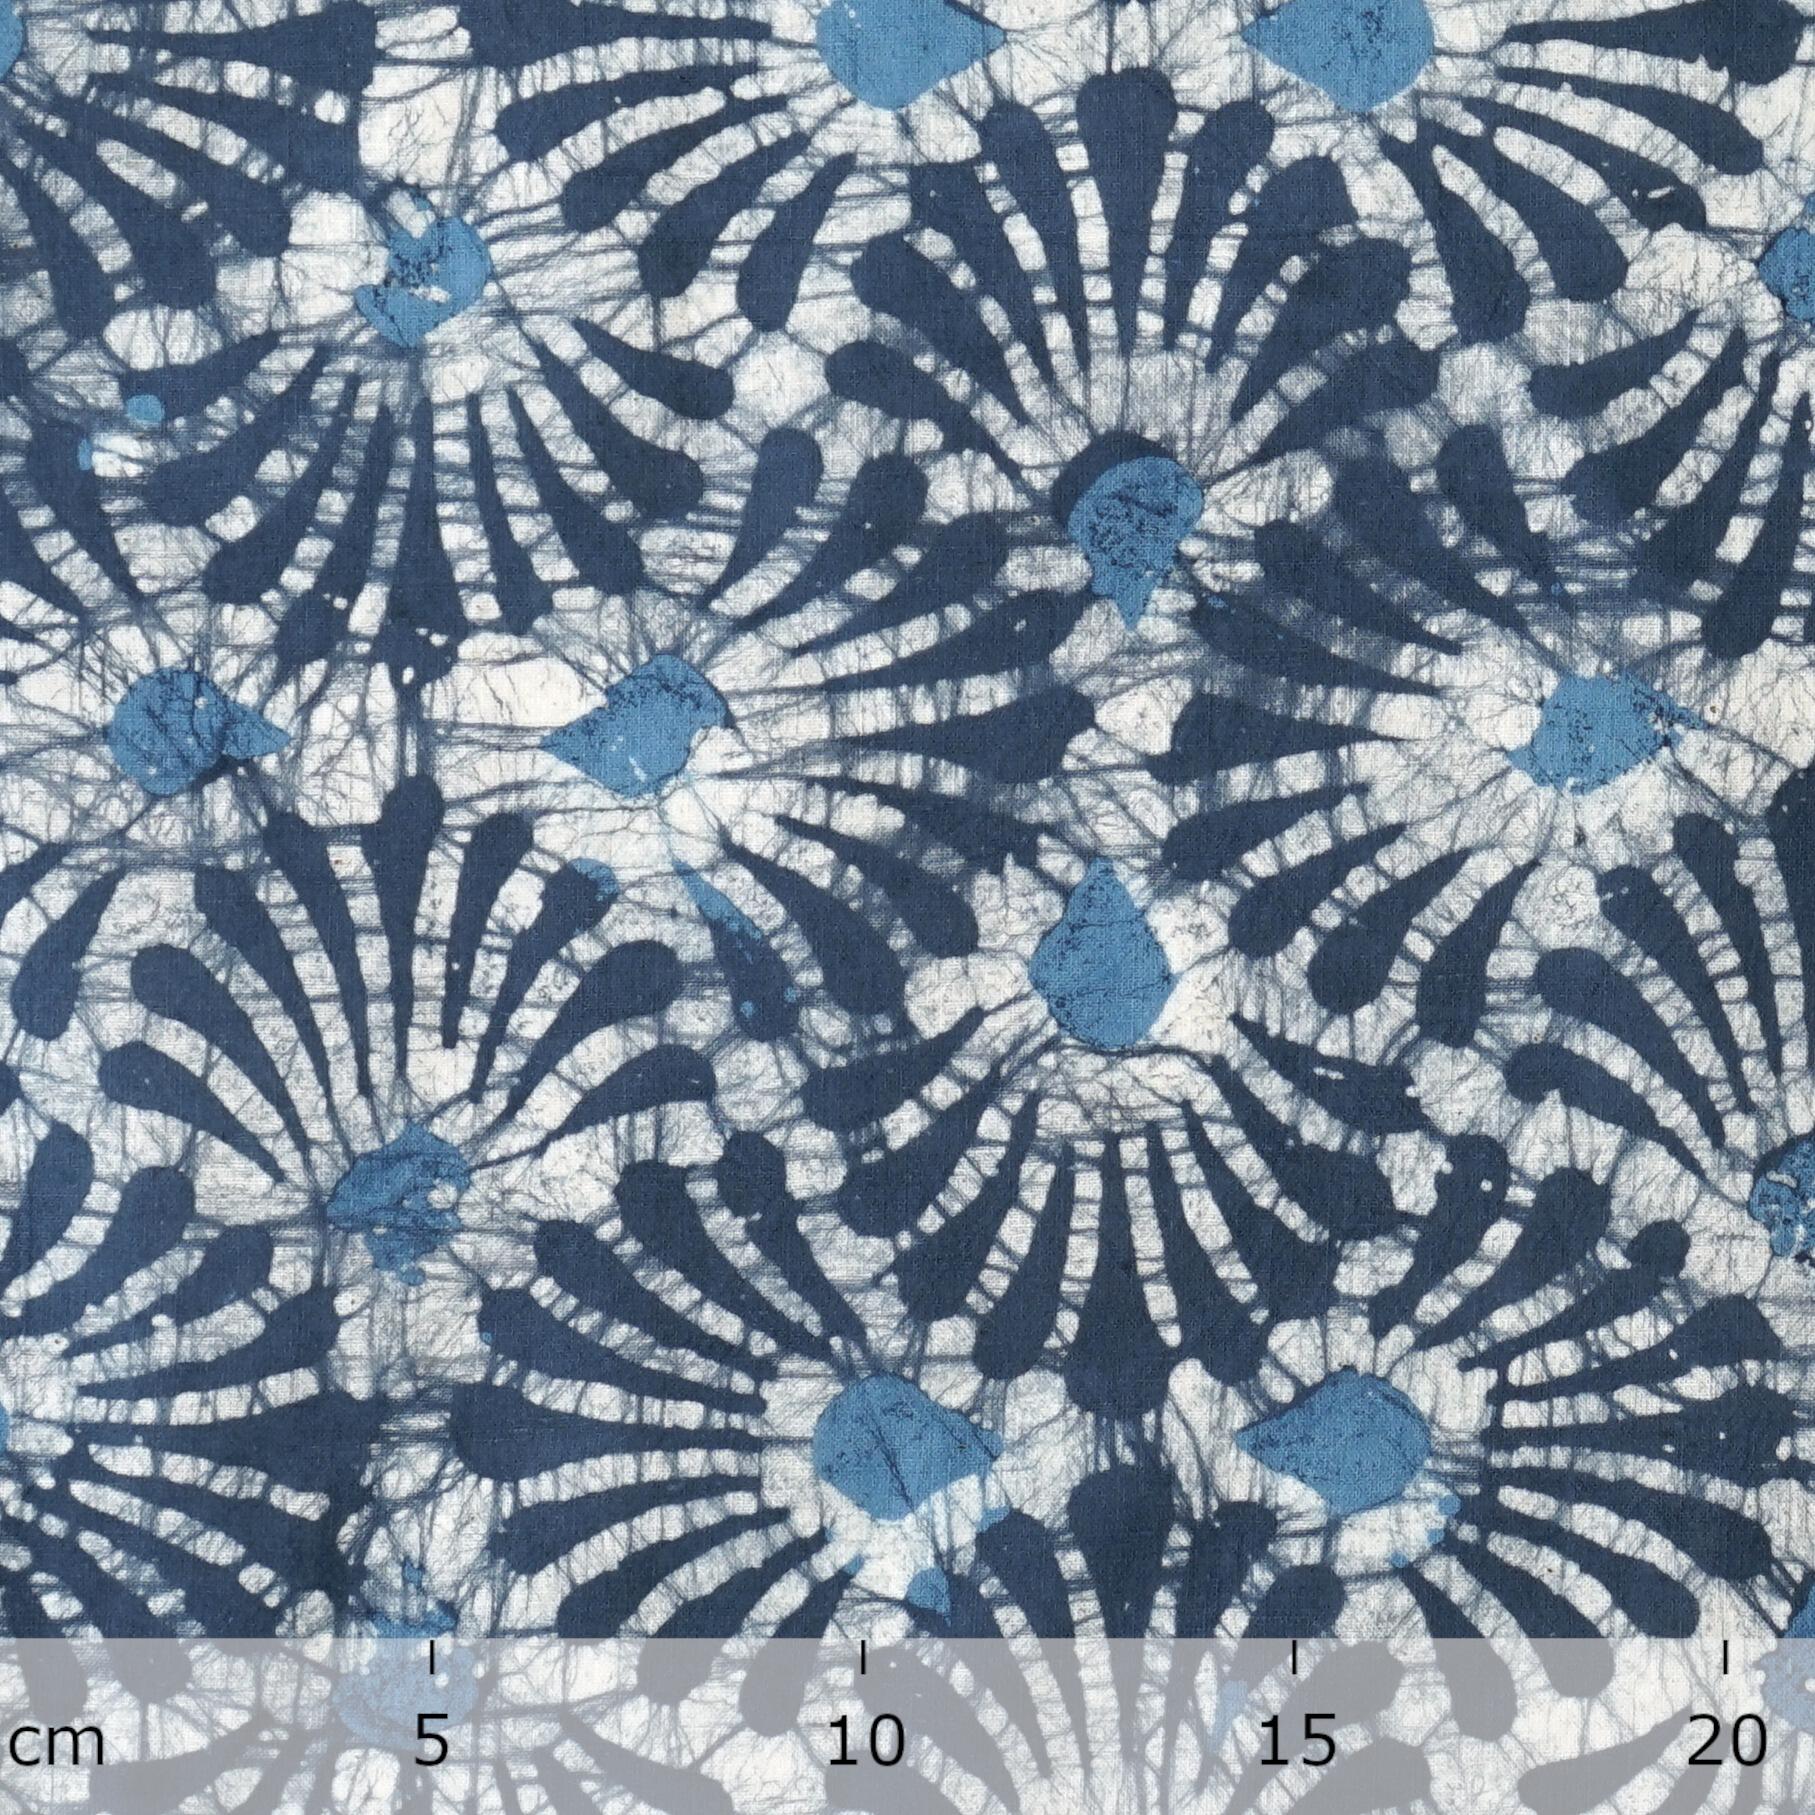 Block-Printed Batik Fabric - Cotton Cloth - Reactive Dyes - Splash Design - Ruler